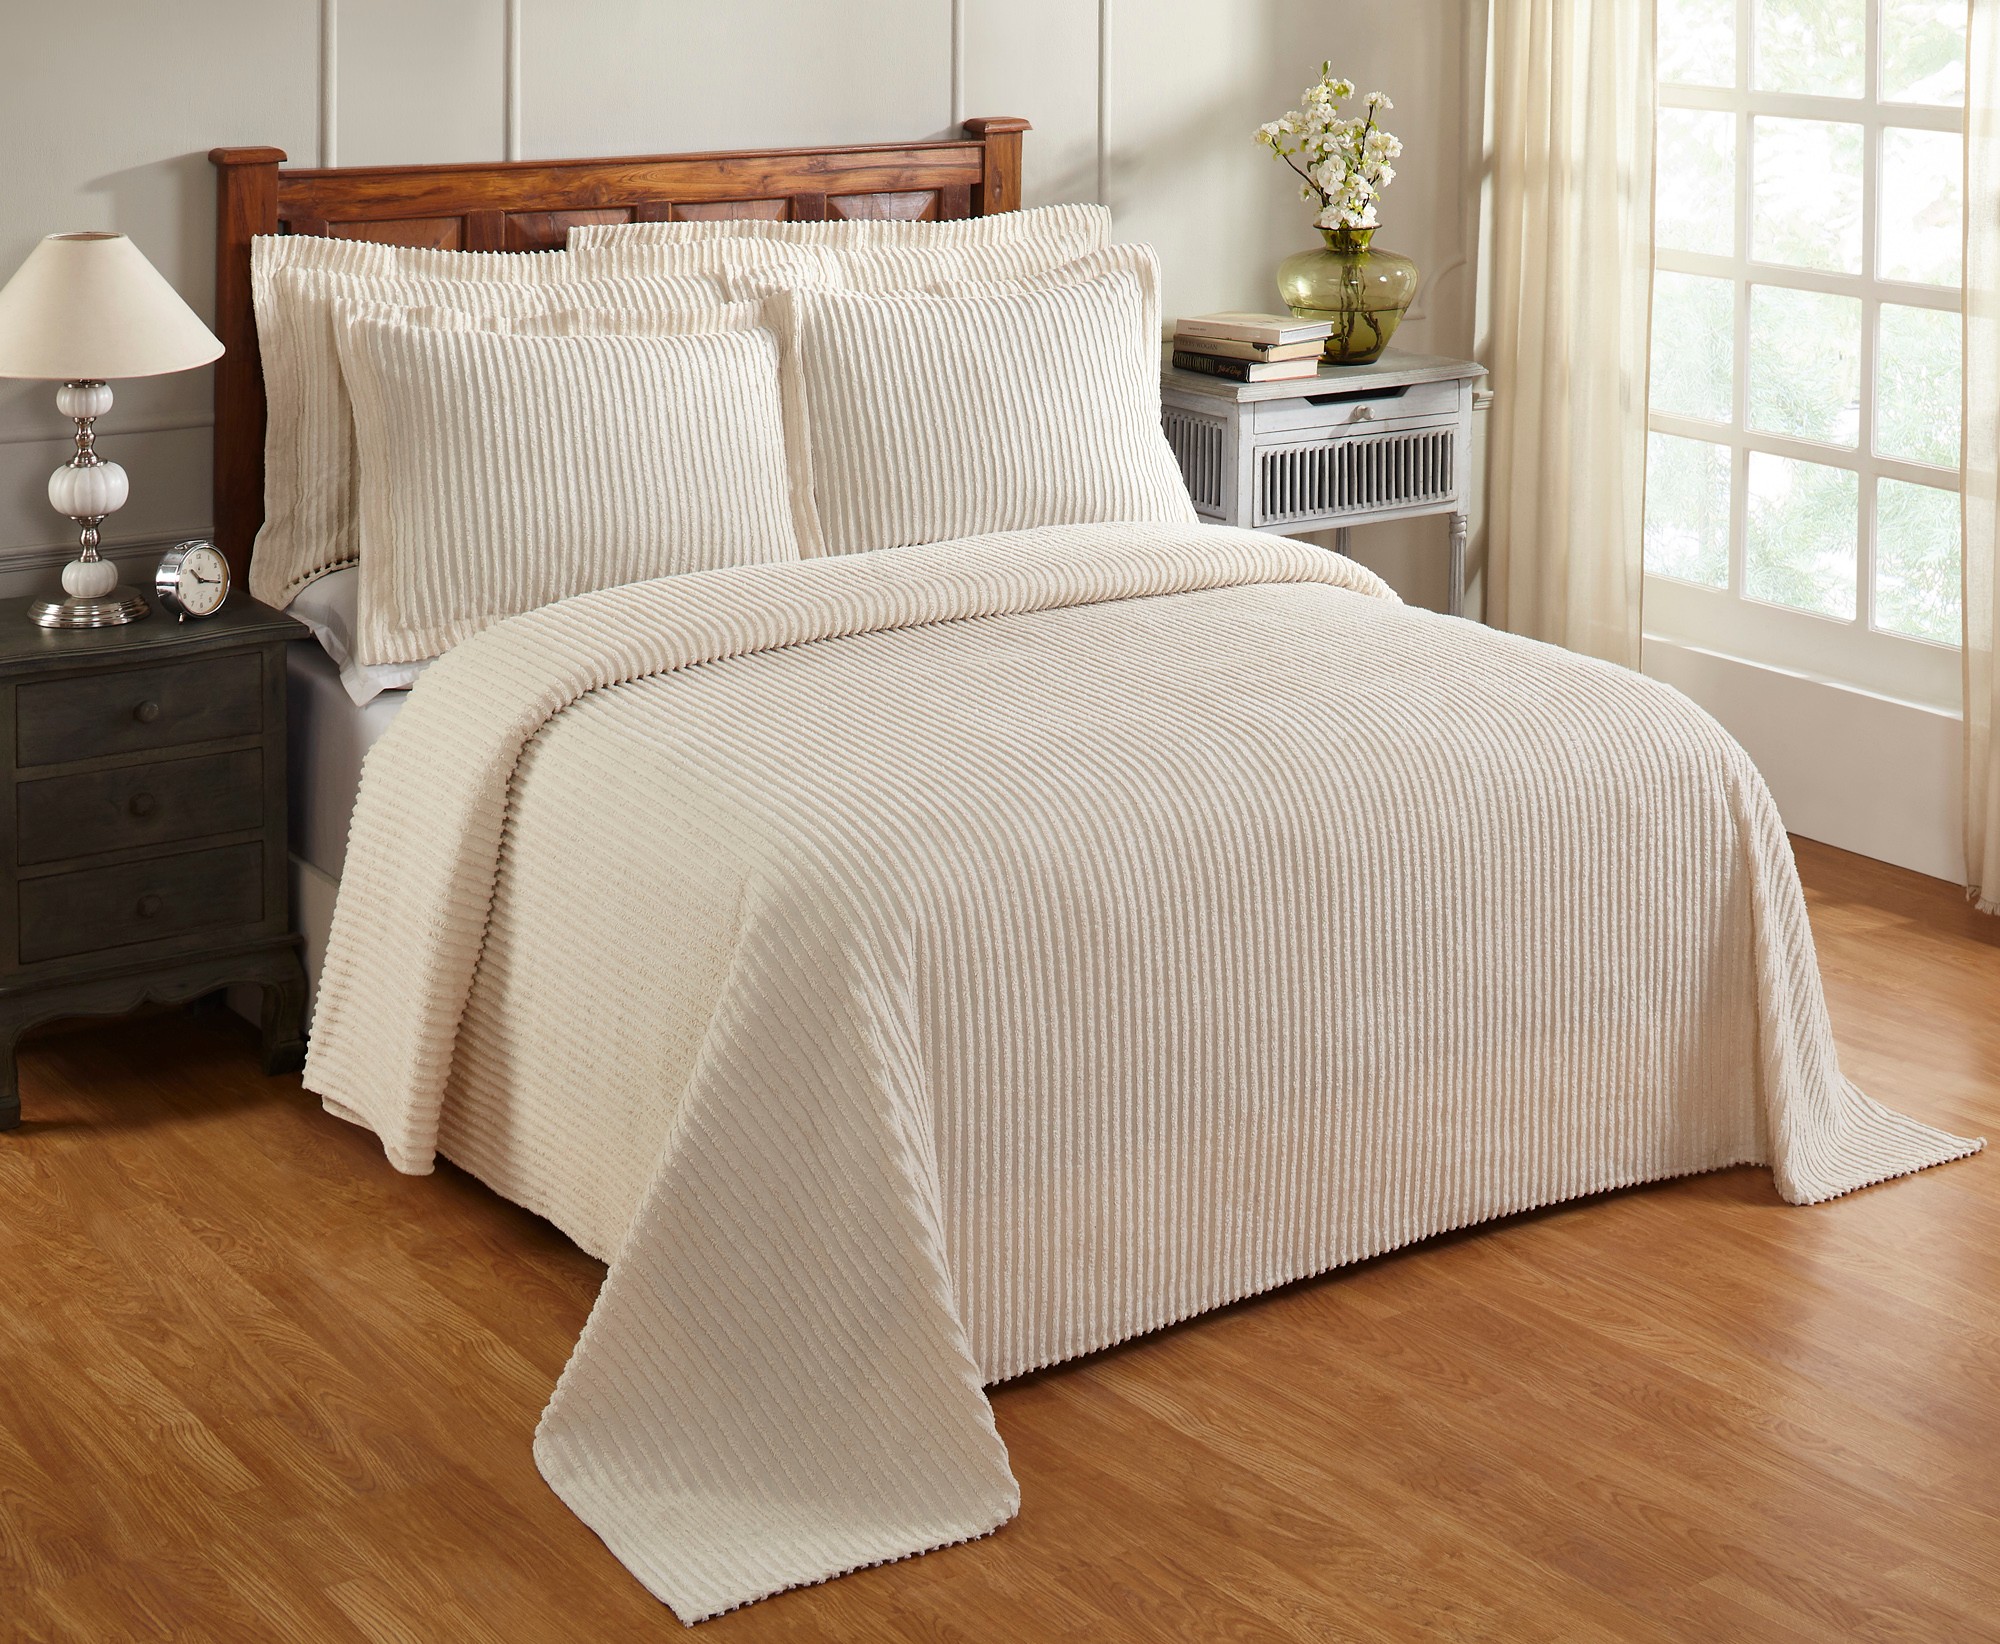 Better Trends Jullian Stripe Design 100% Cotton King Bedspread - Ivory - image 1 of 6